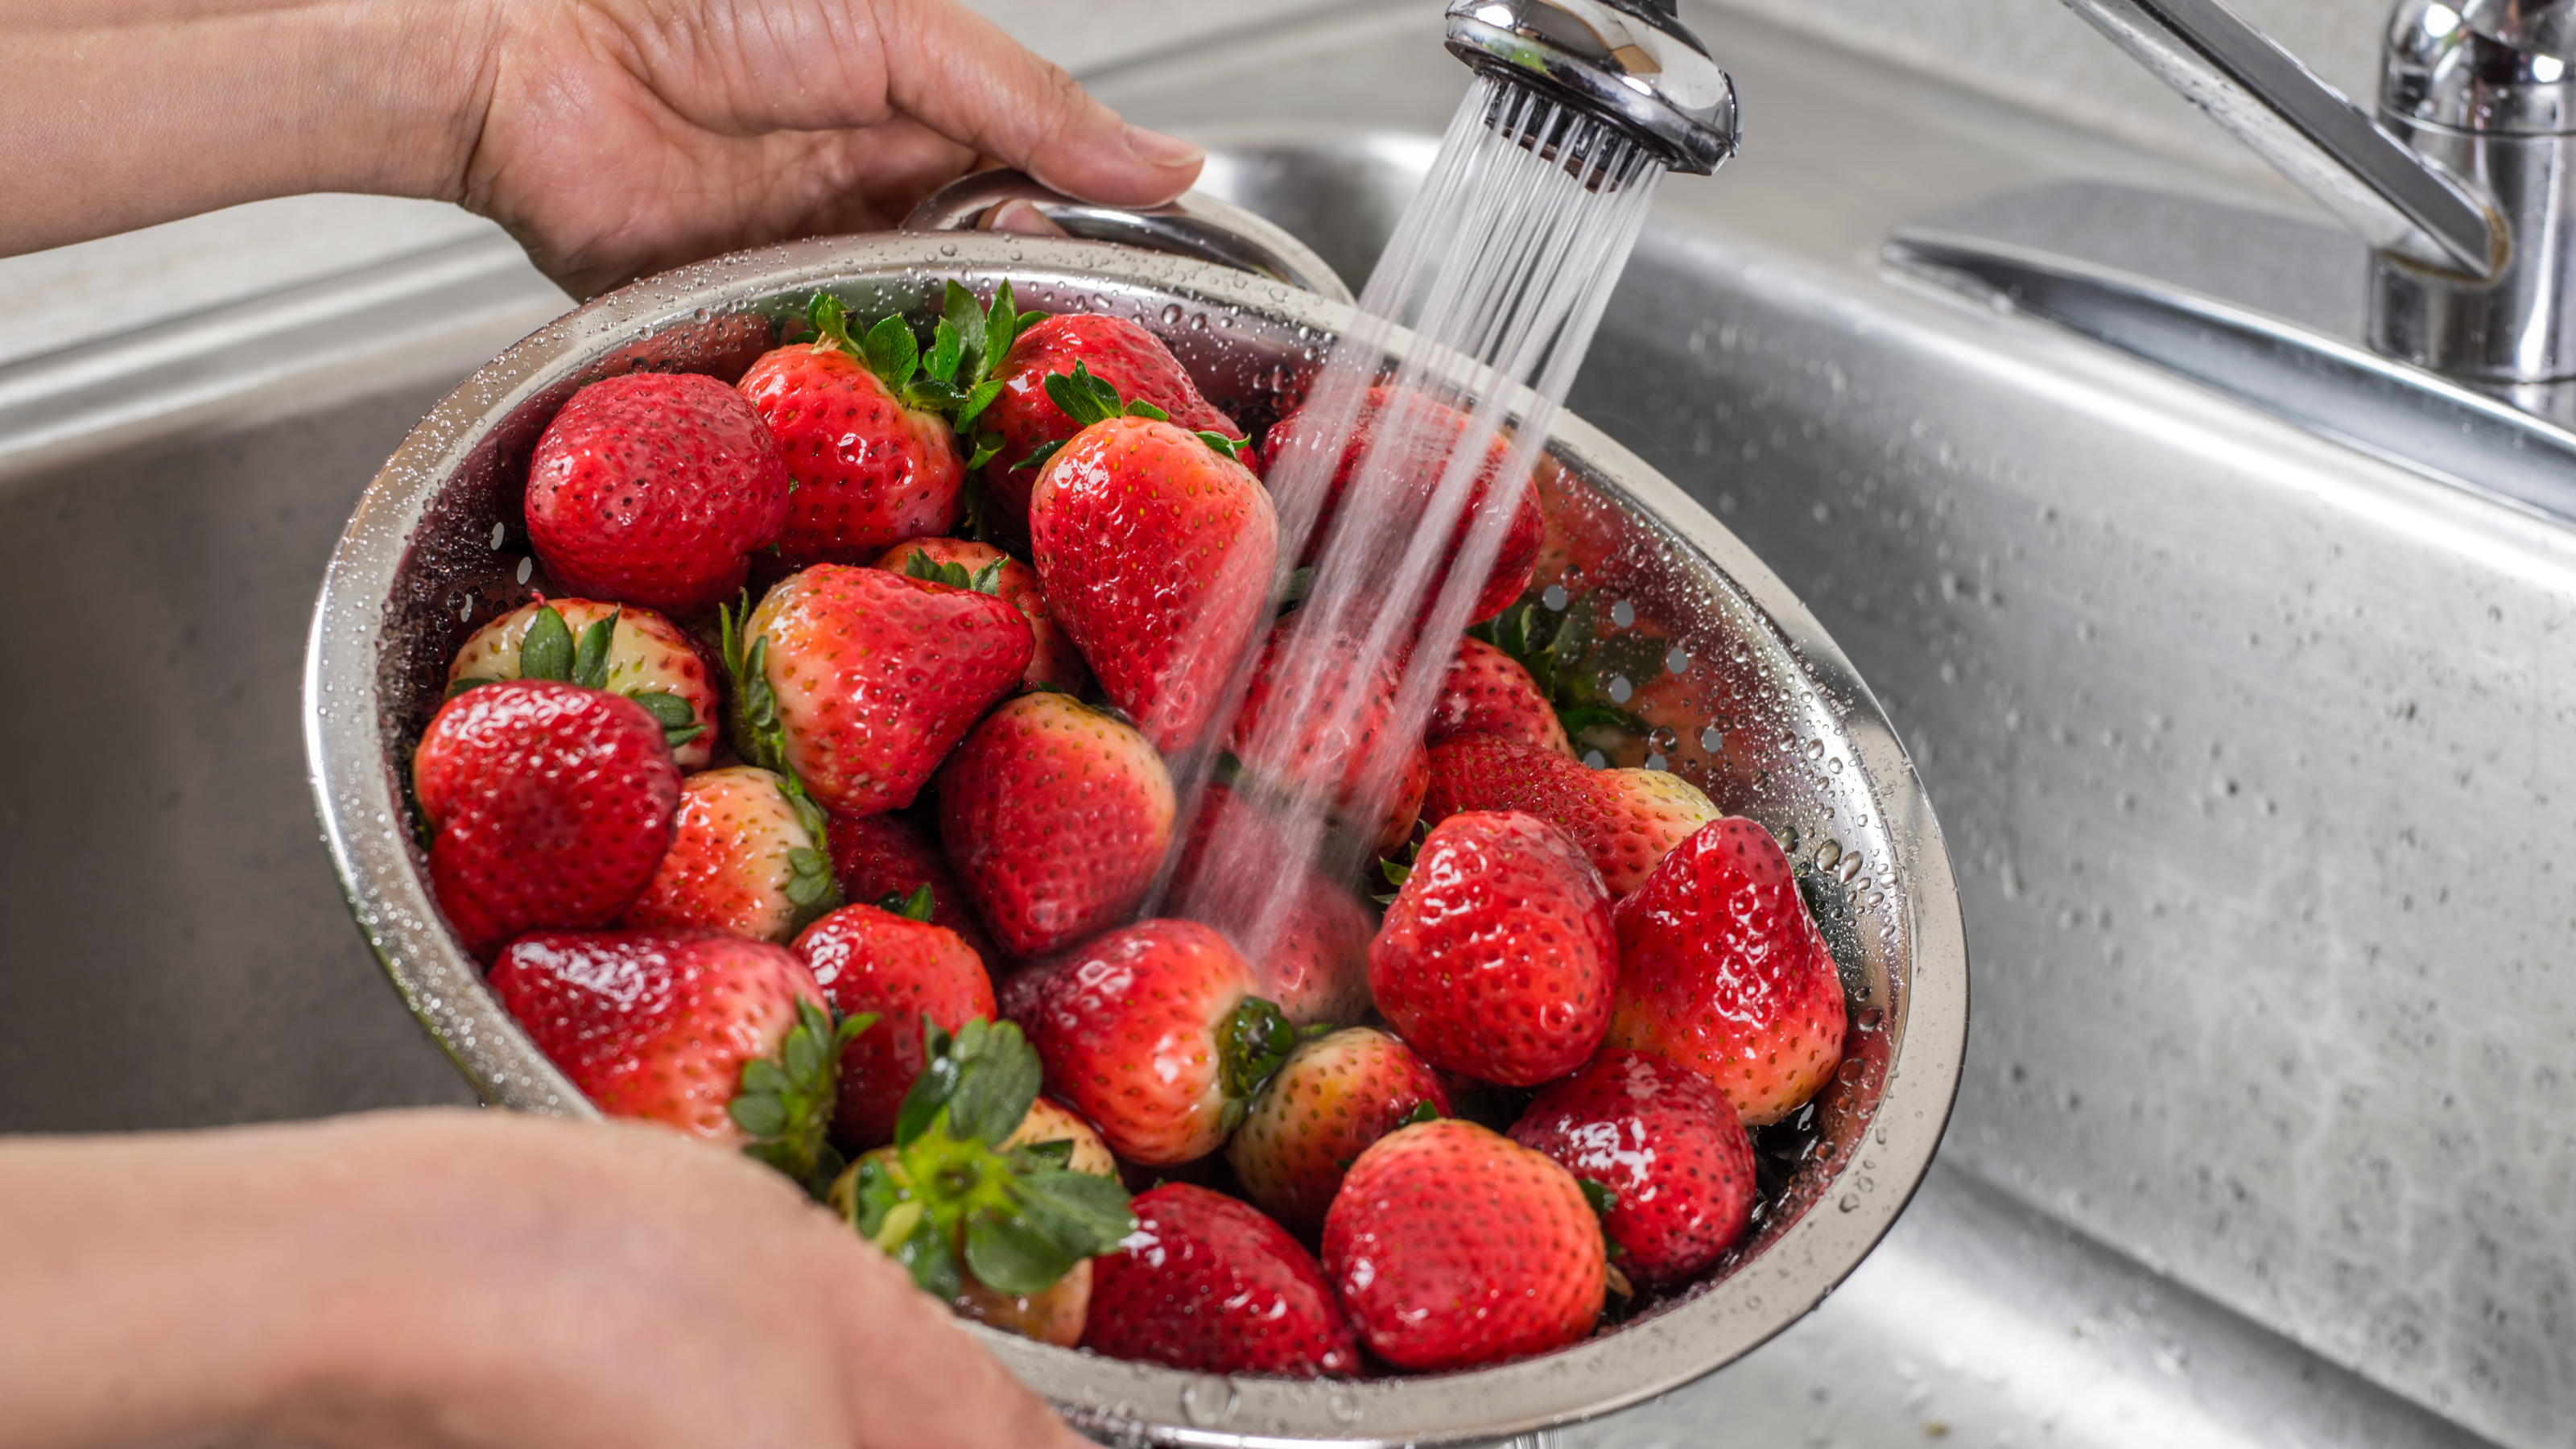 DIY Vinegar Fruit Wash  How to Make Your Berries Last Longer